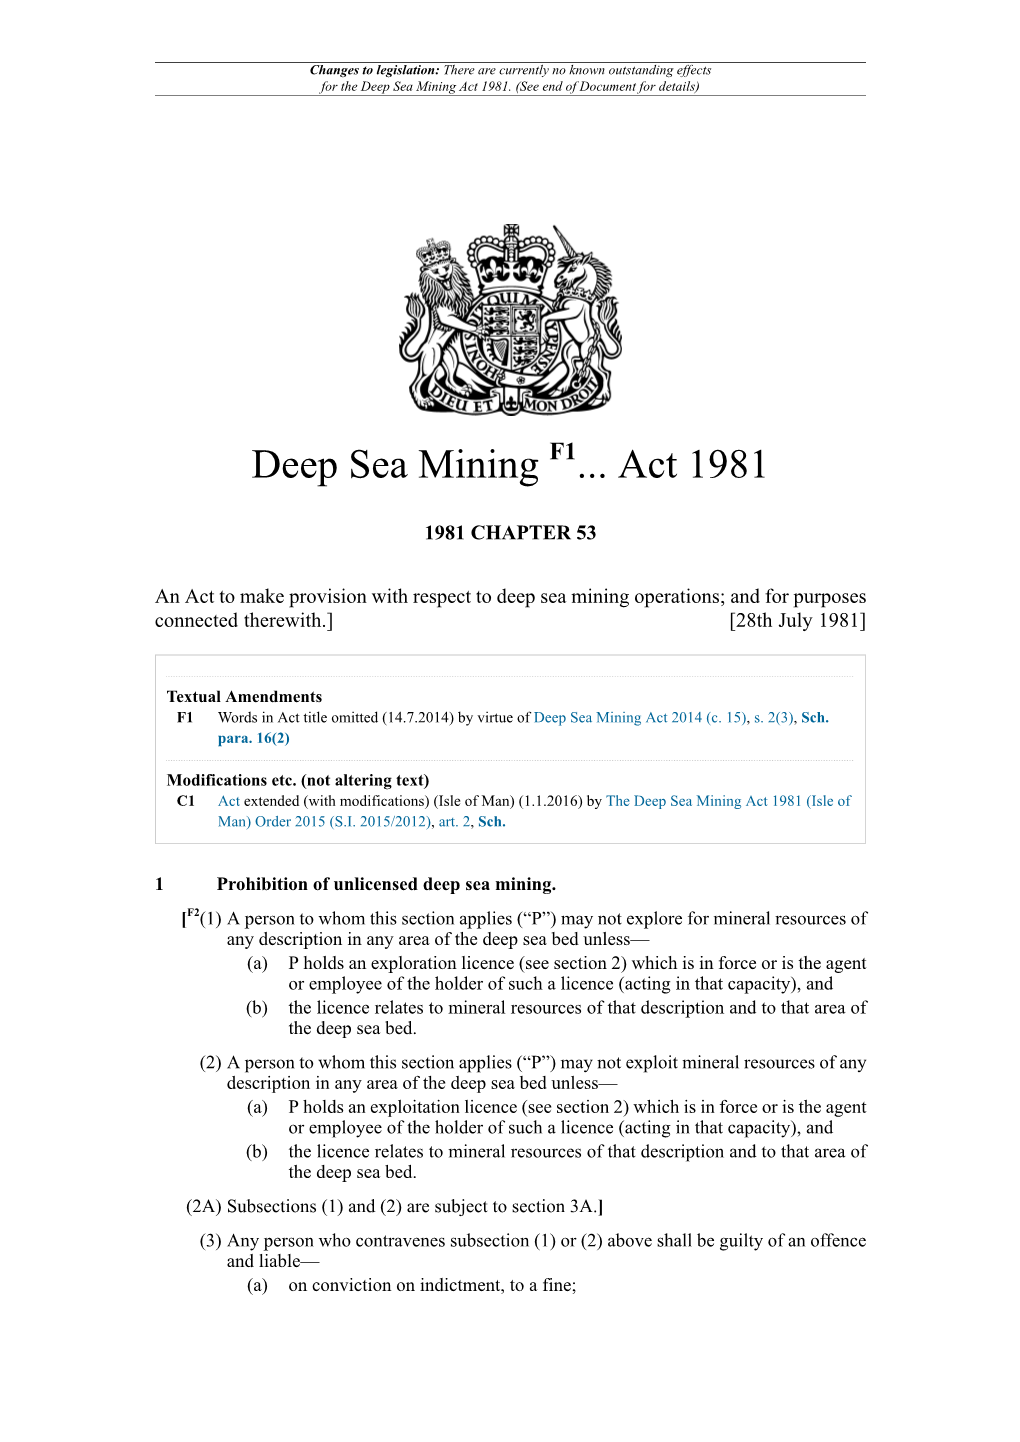 Deep Sea Mining Act 1981